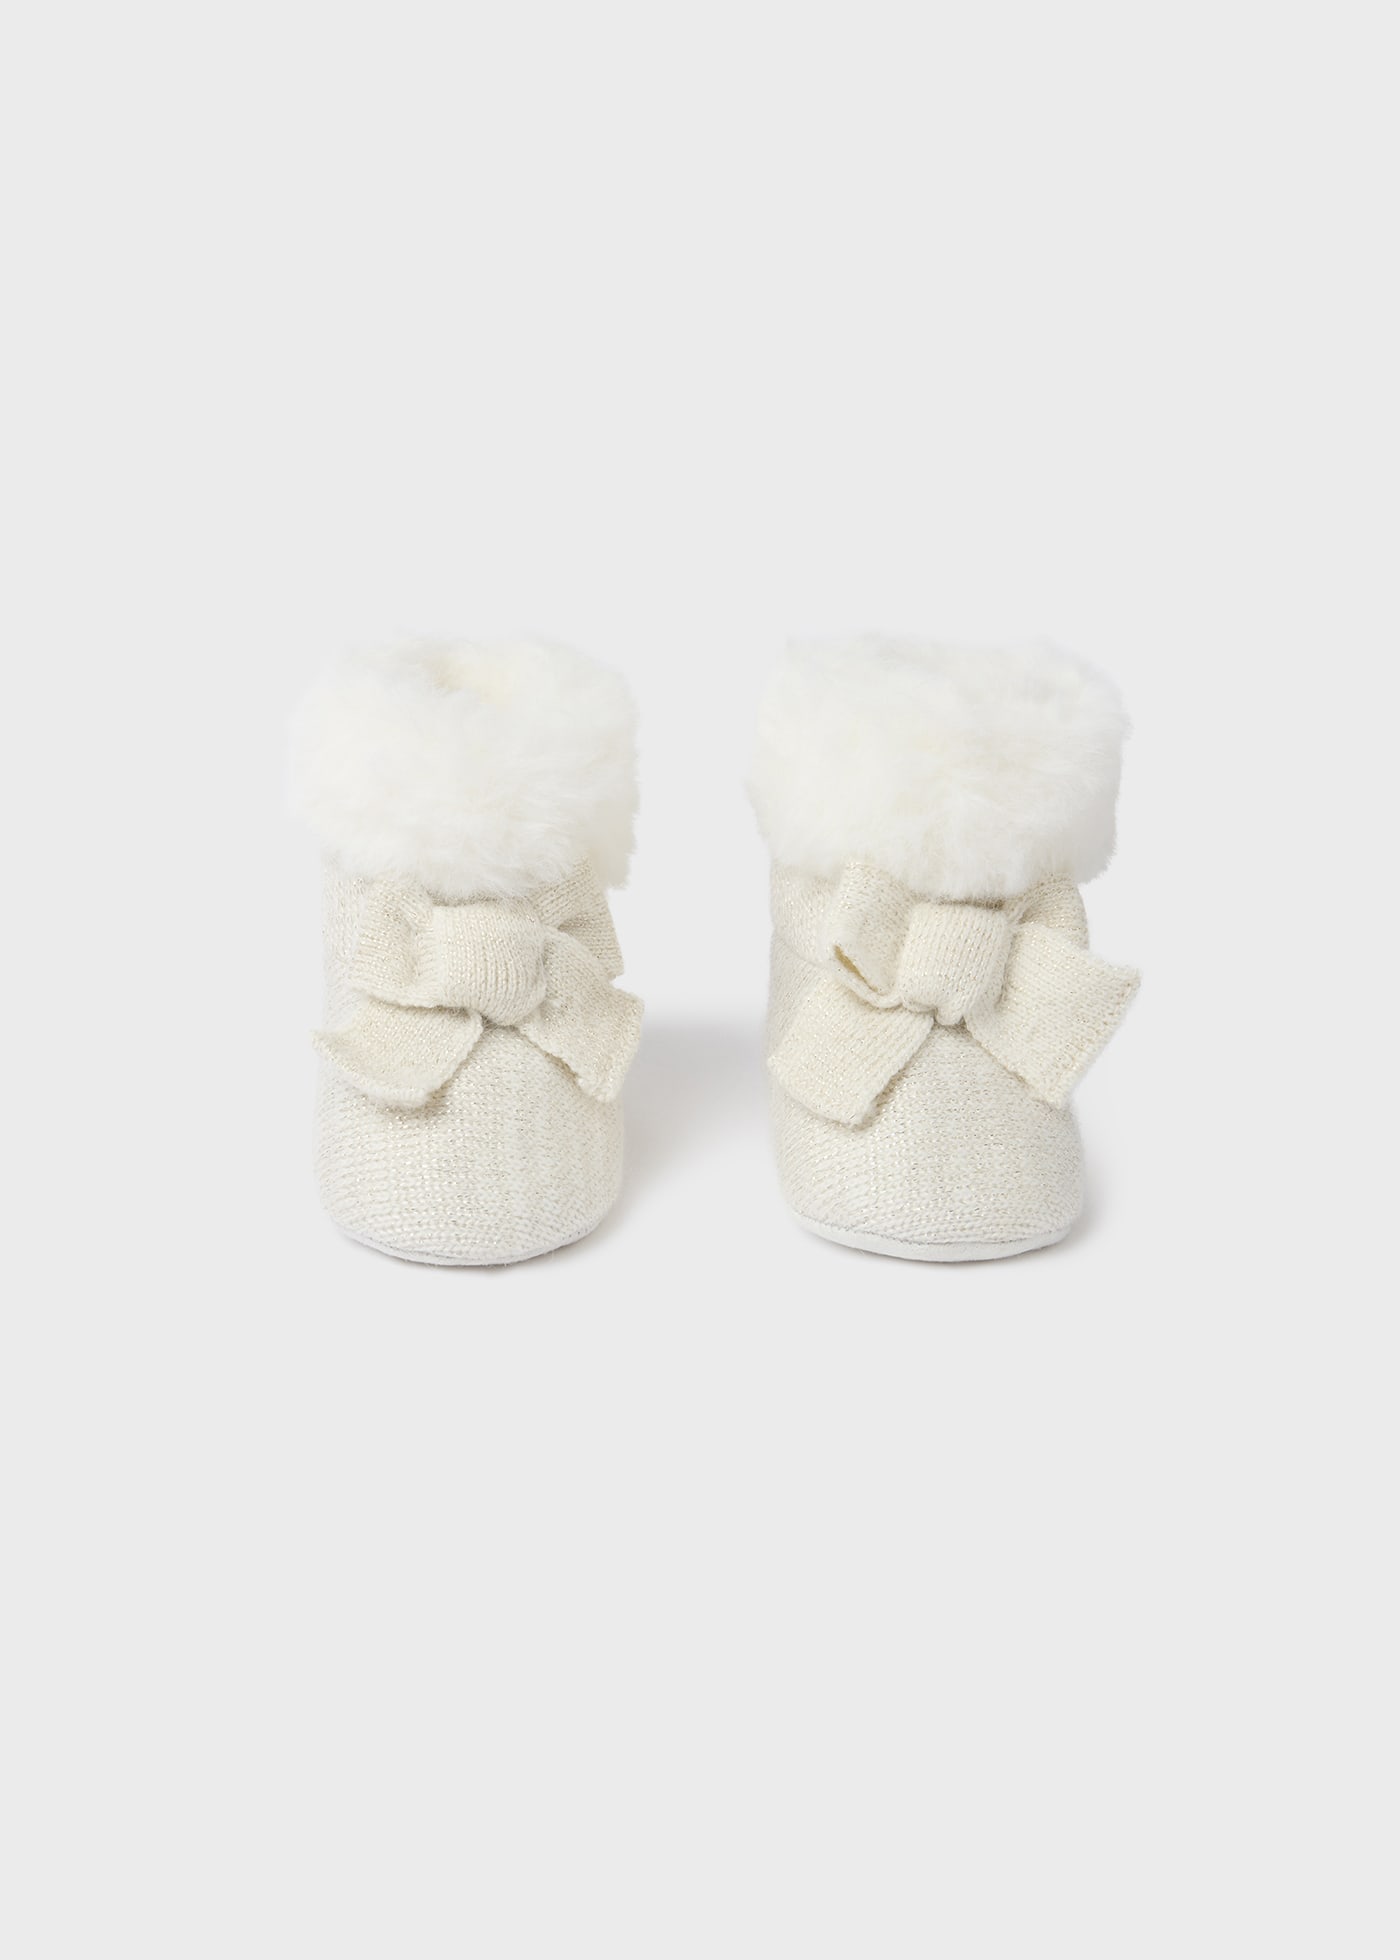 Faux fur knit booties newborn baby